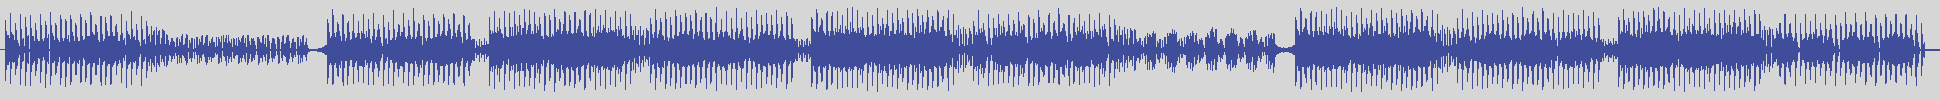 nf_boyz_records [NFY058] Francis Leone - Change Shape [Sunset Section Mix] audio wave form